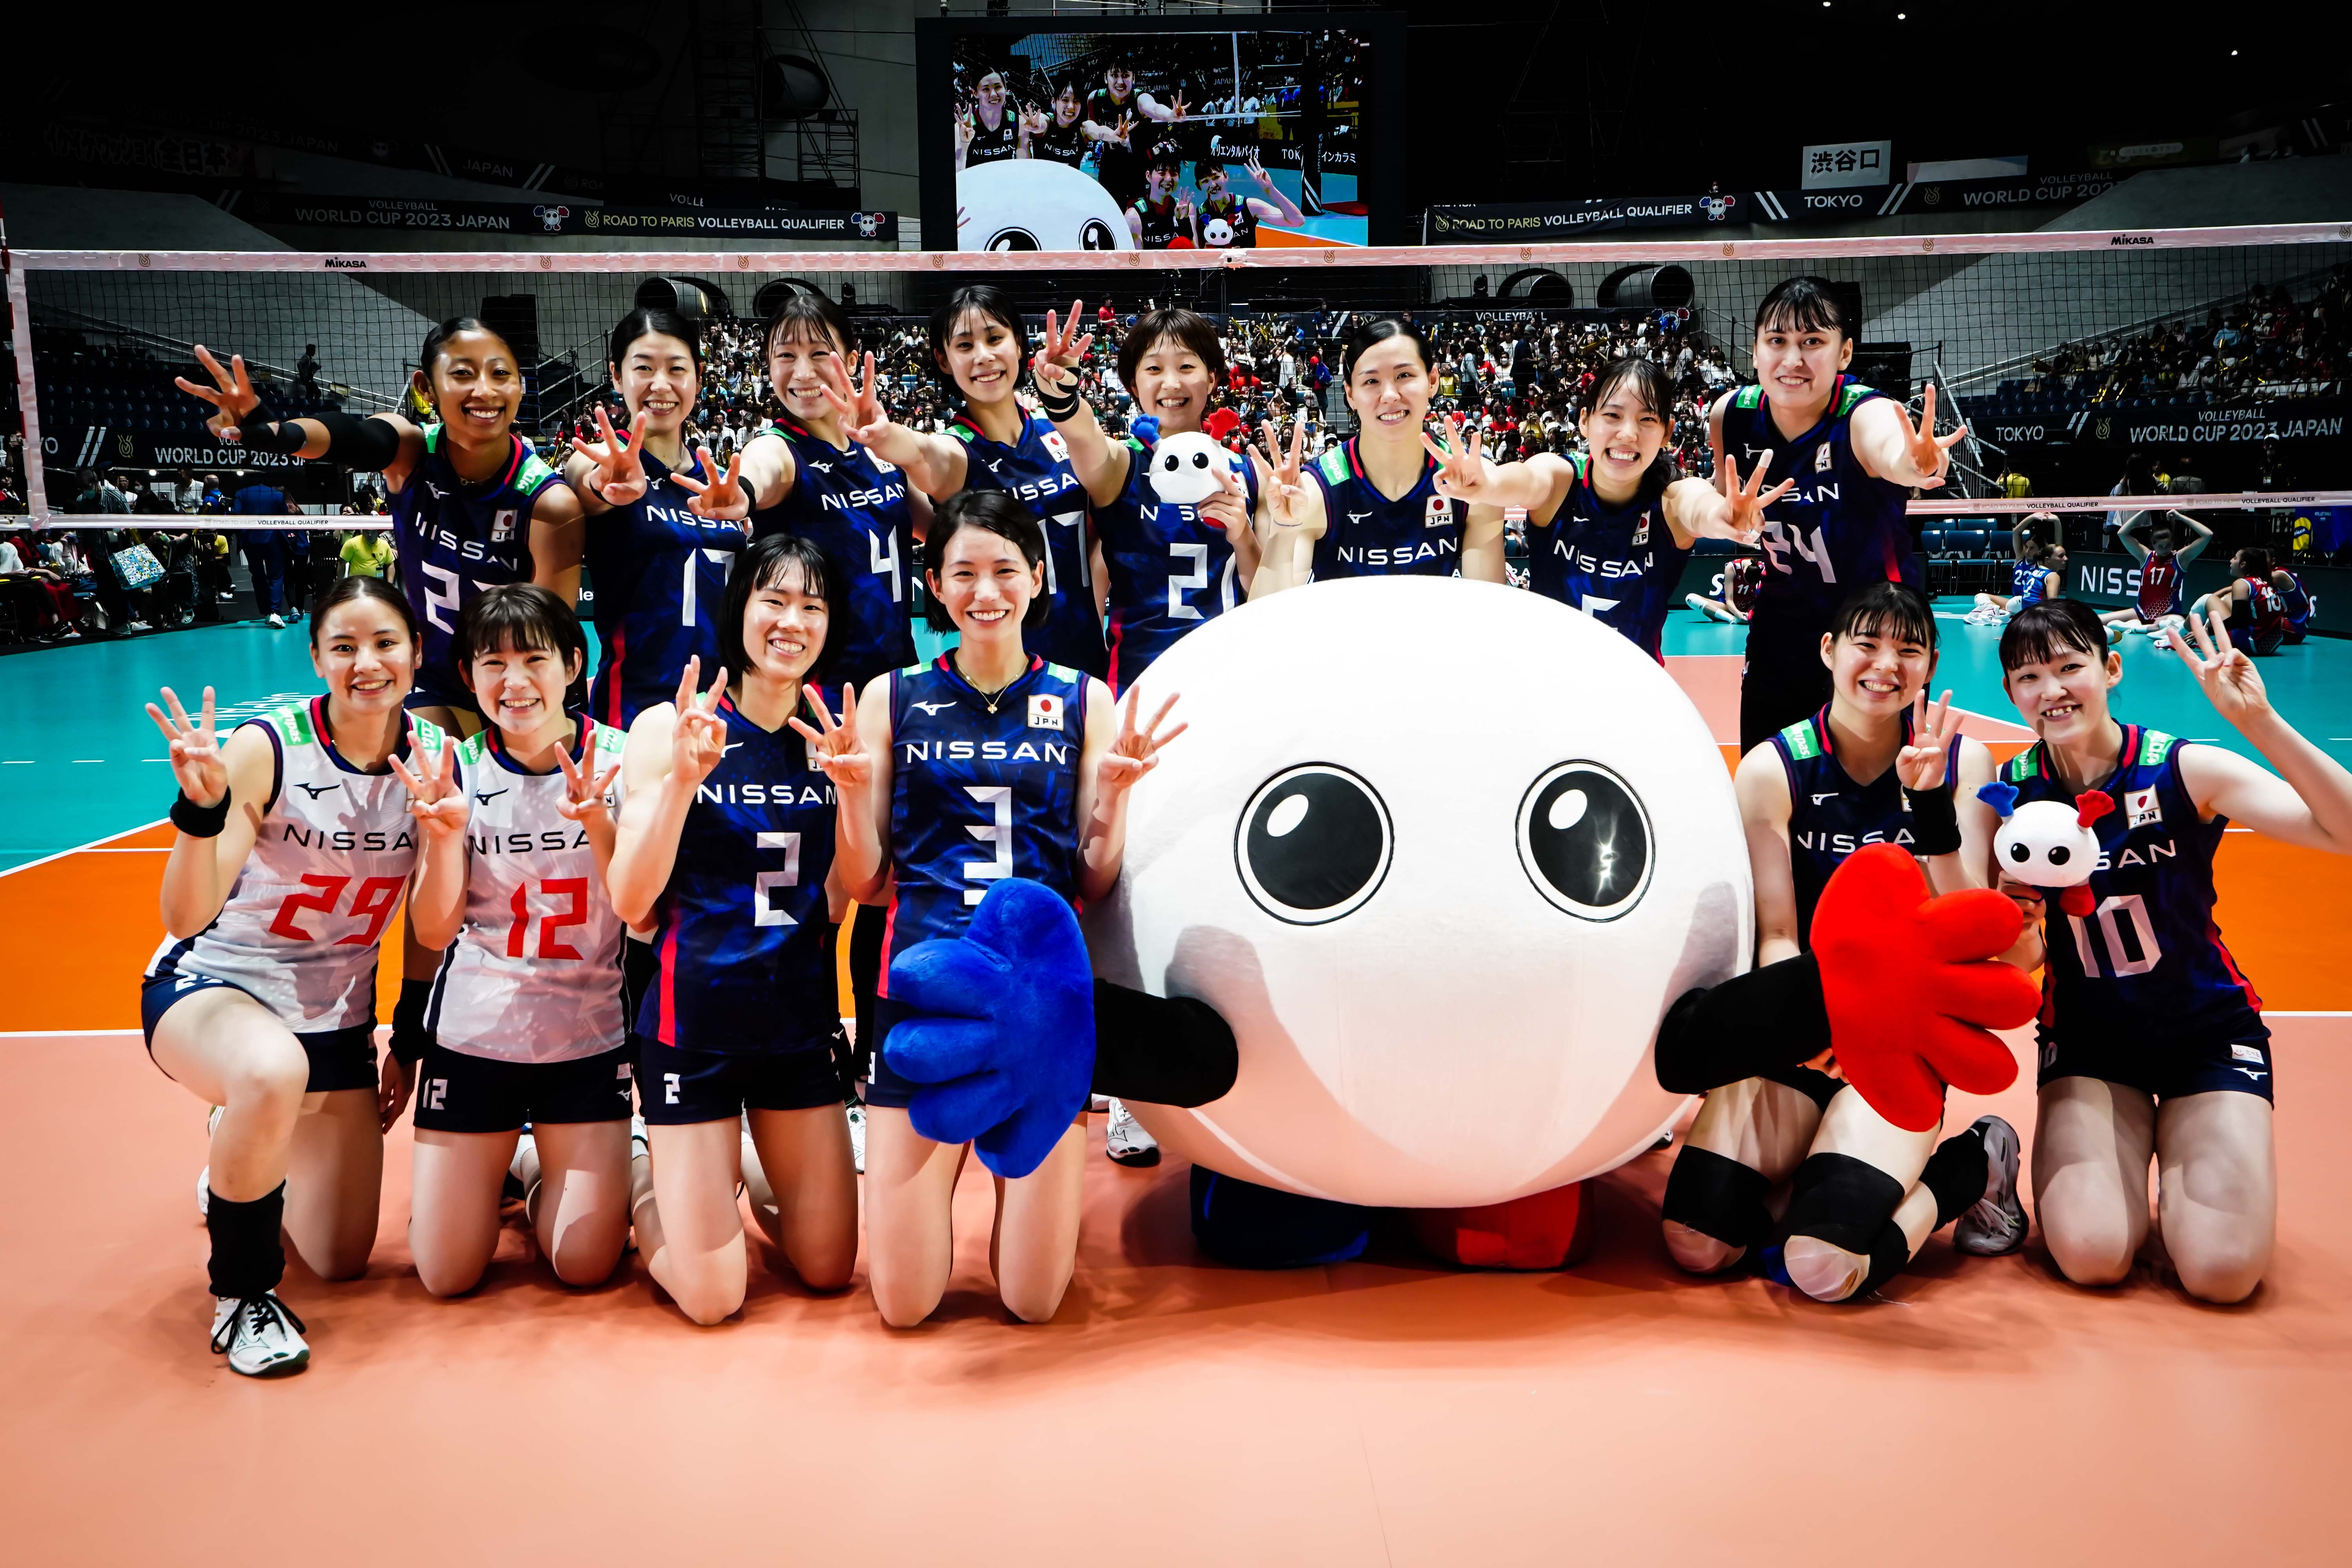 Paris 2024 Volleyball Qualifiers TOKIO Inkarami as Official